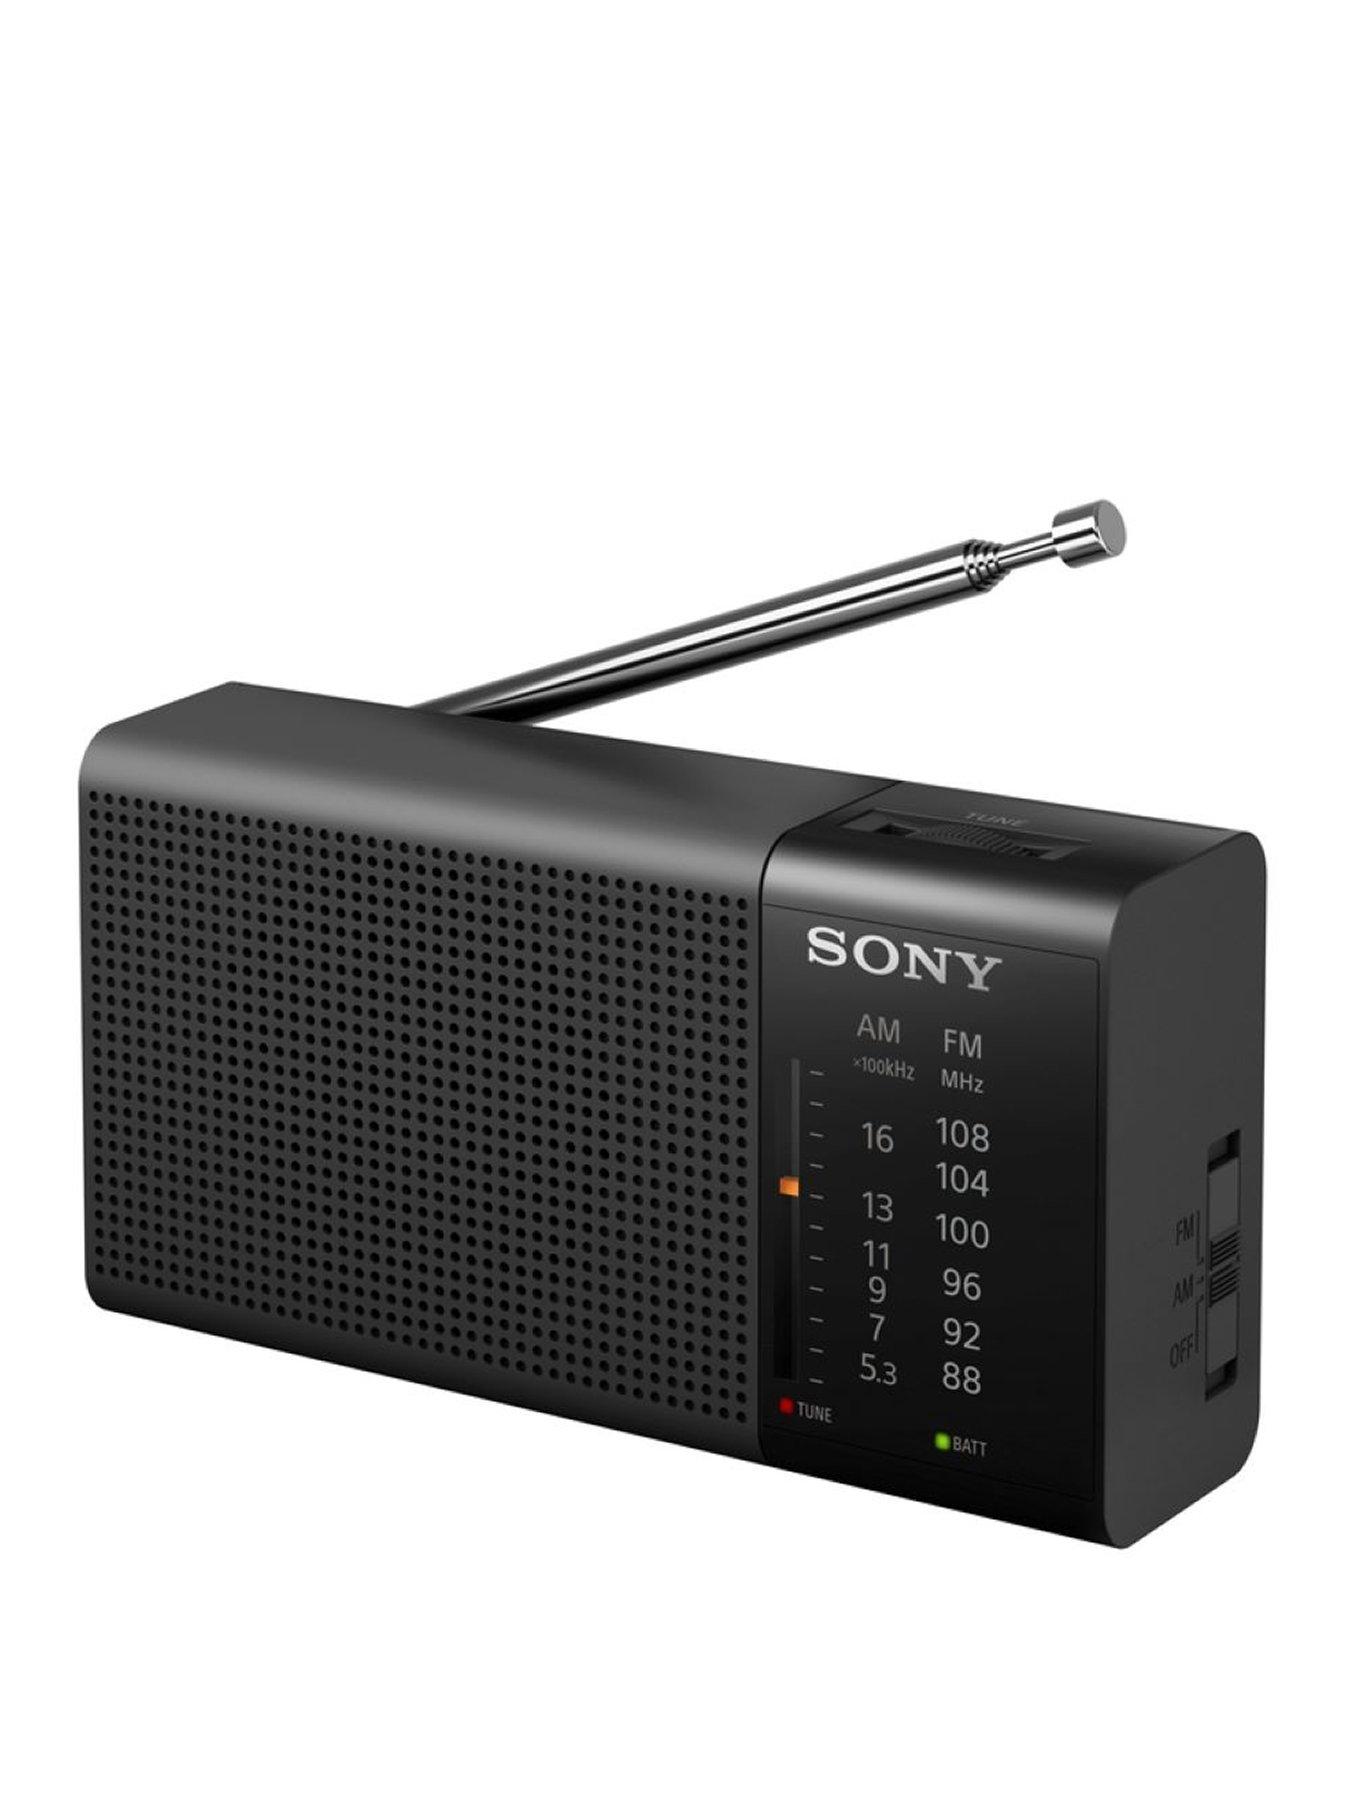 Sony Icf P37 Portable Amfm Radio Black Uk